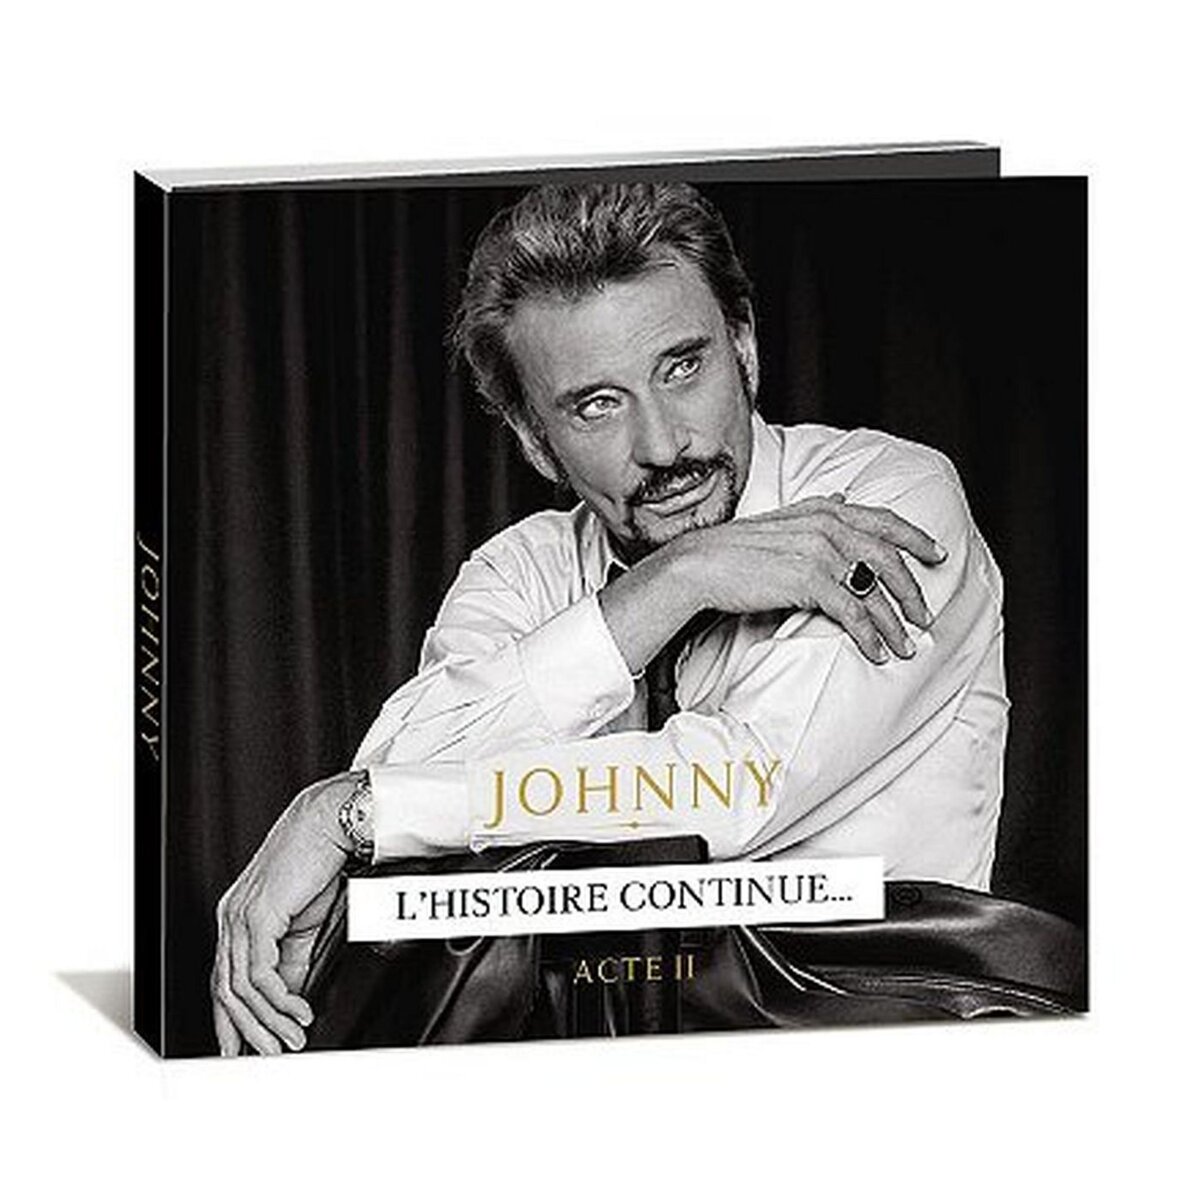 Johnny Hallyday - Acte II CD